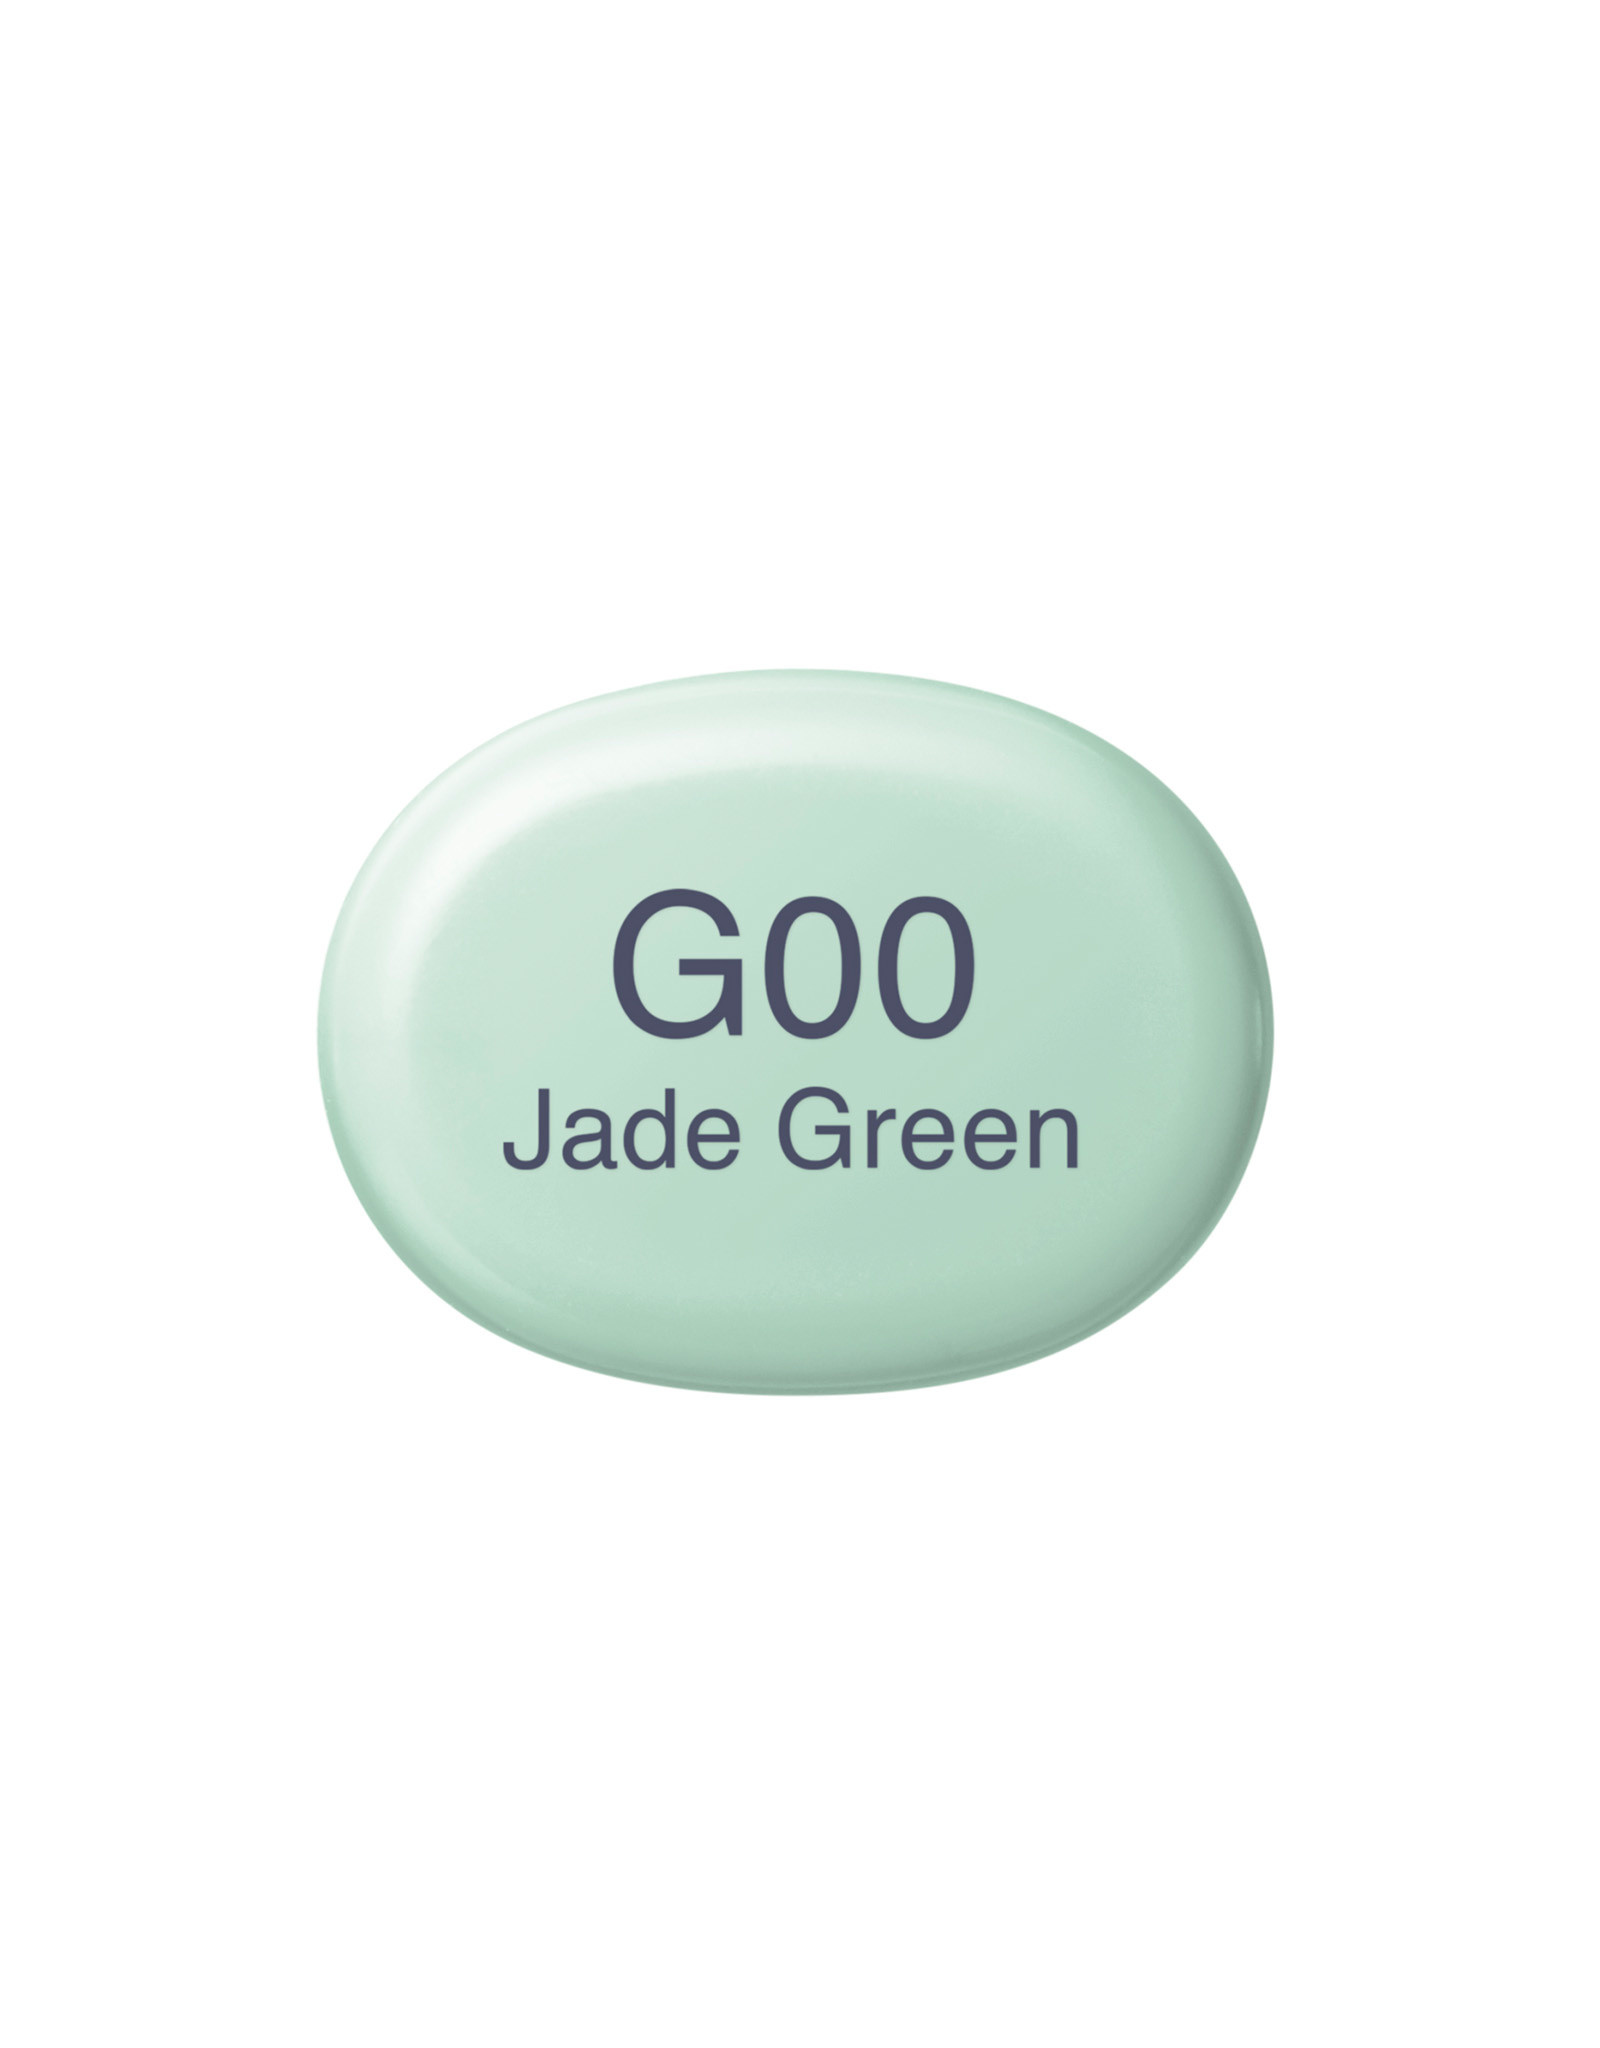 COPIC COPIC Sketch Marker G00 Jade Green